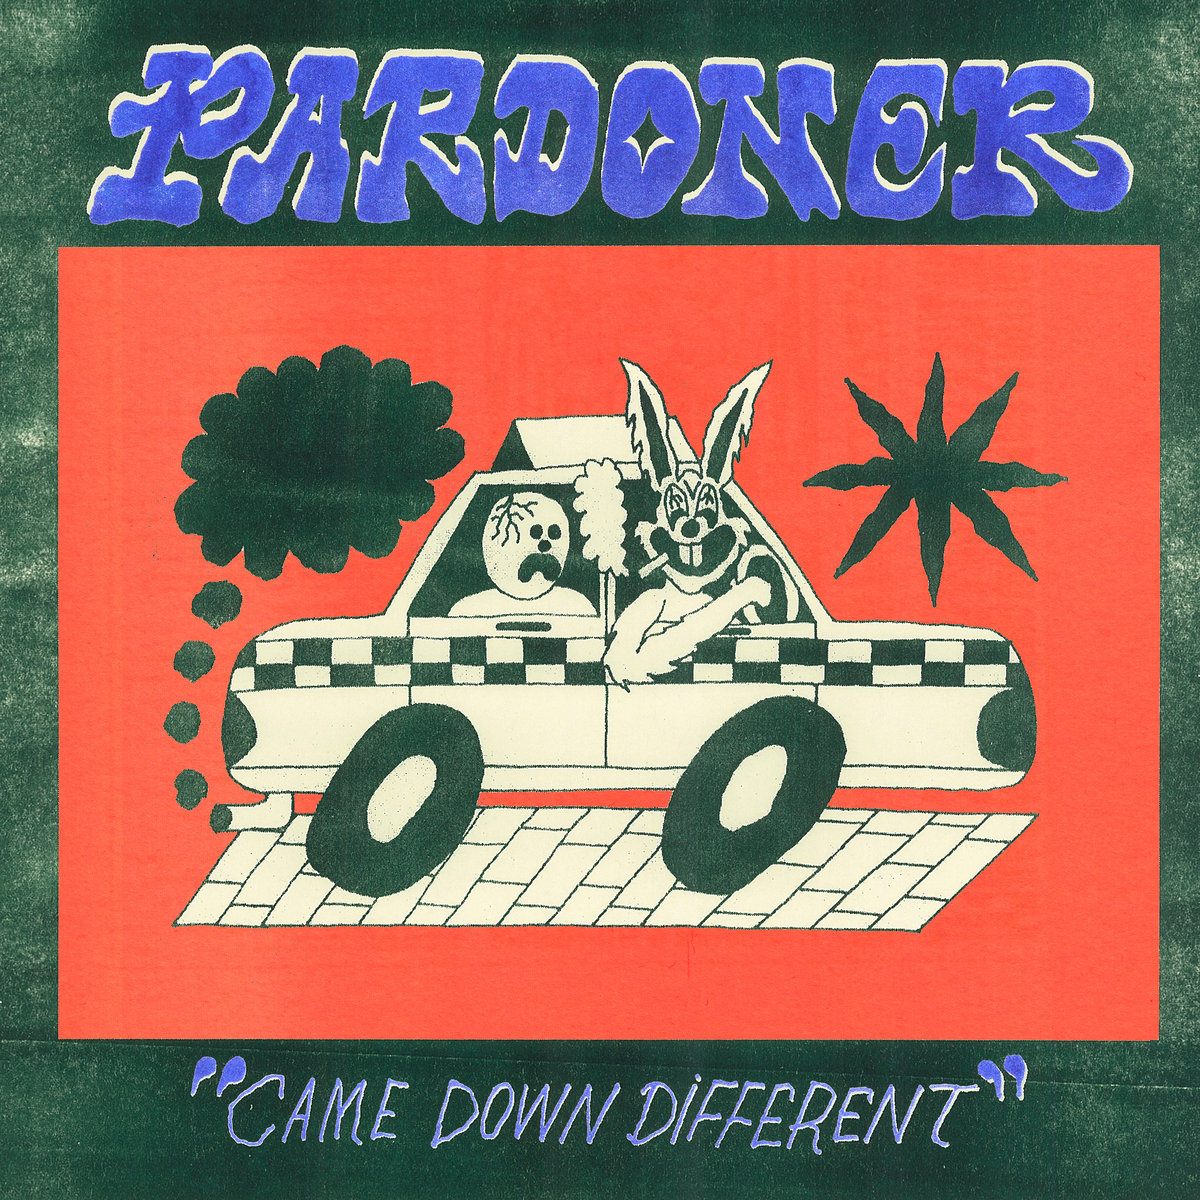 pardoner came down different album art, drawing of a cartoon rabbit driving a taxi